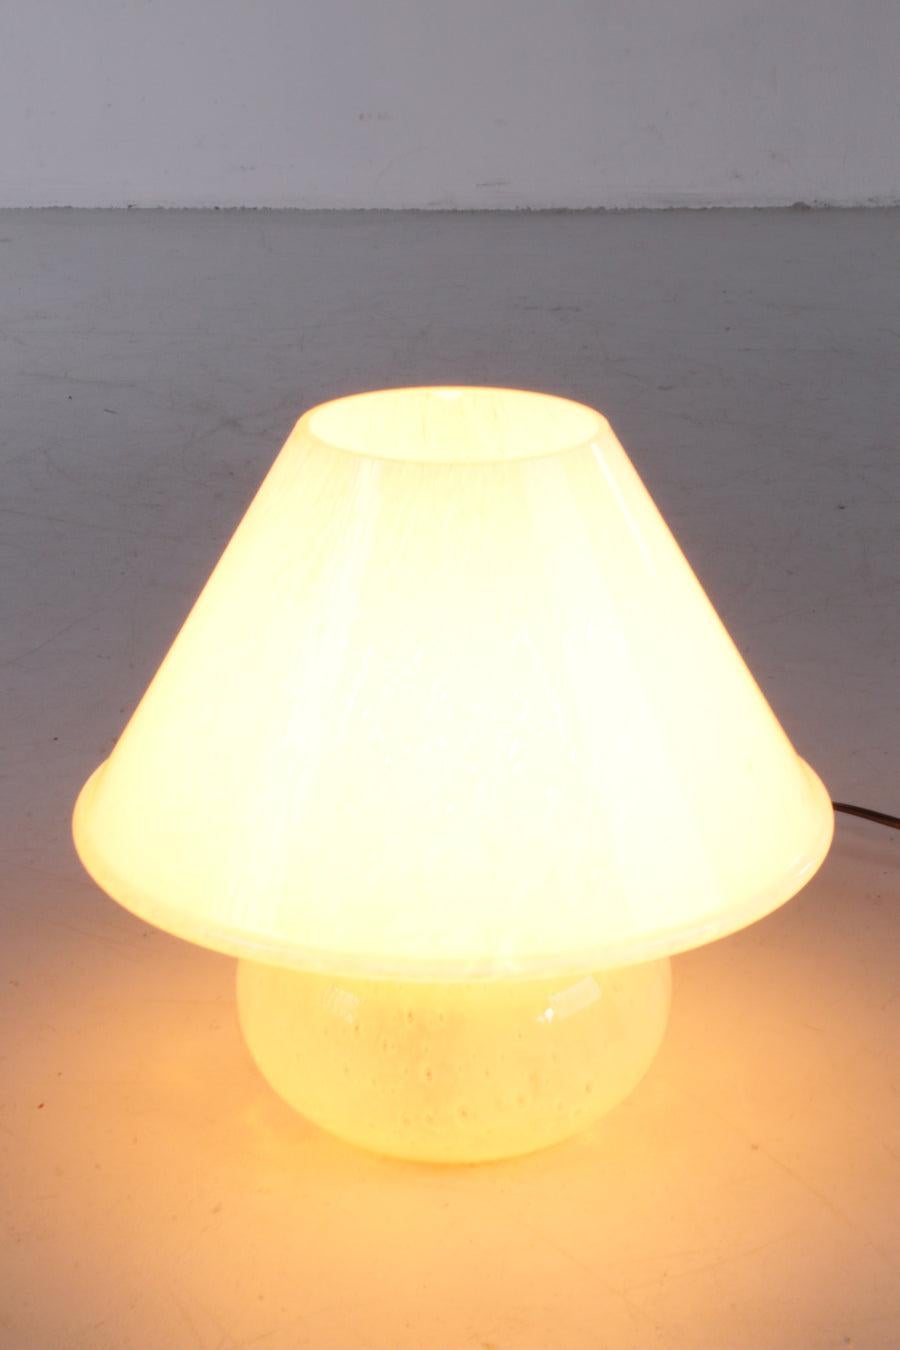 Murano Table Lamp Model Champignon by Glashutte Limburg,1960s

Lamp 